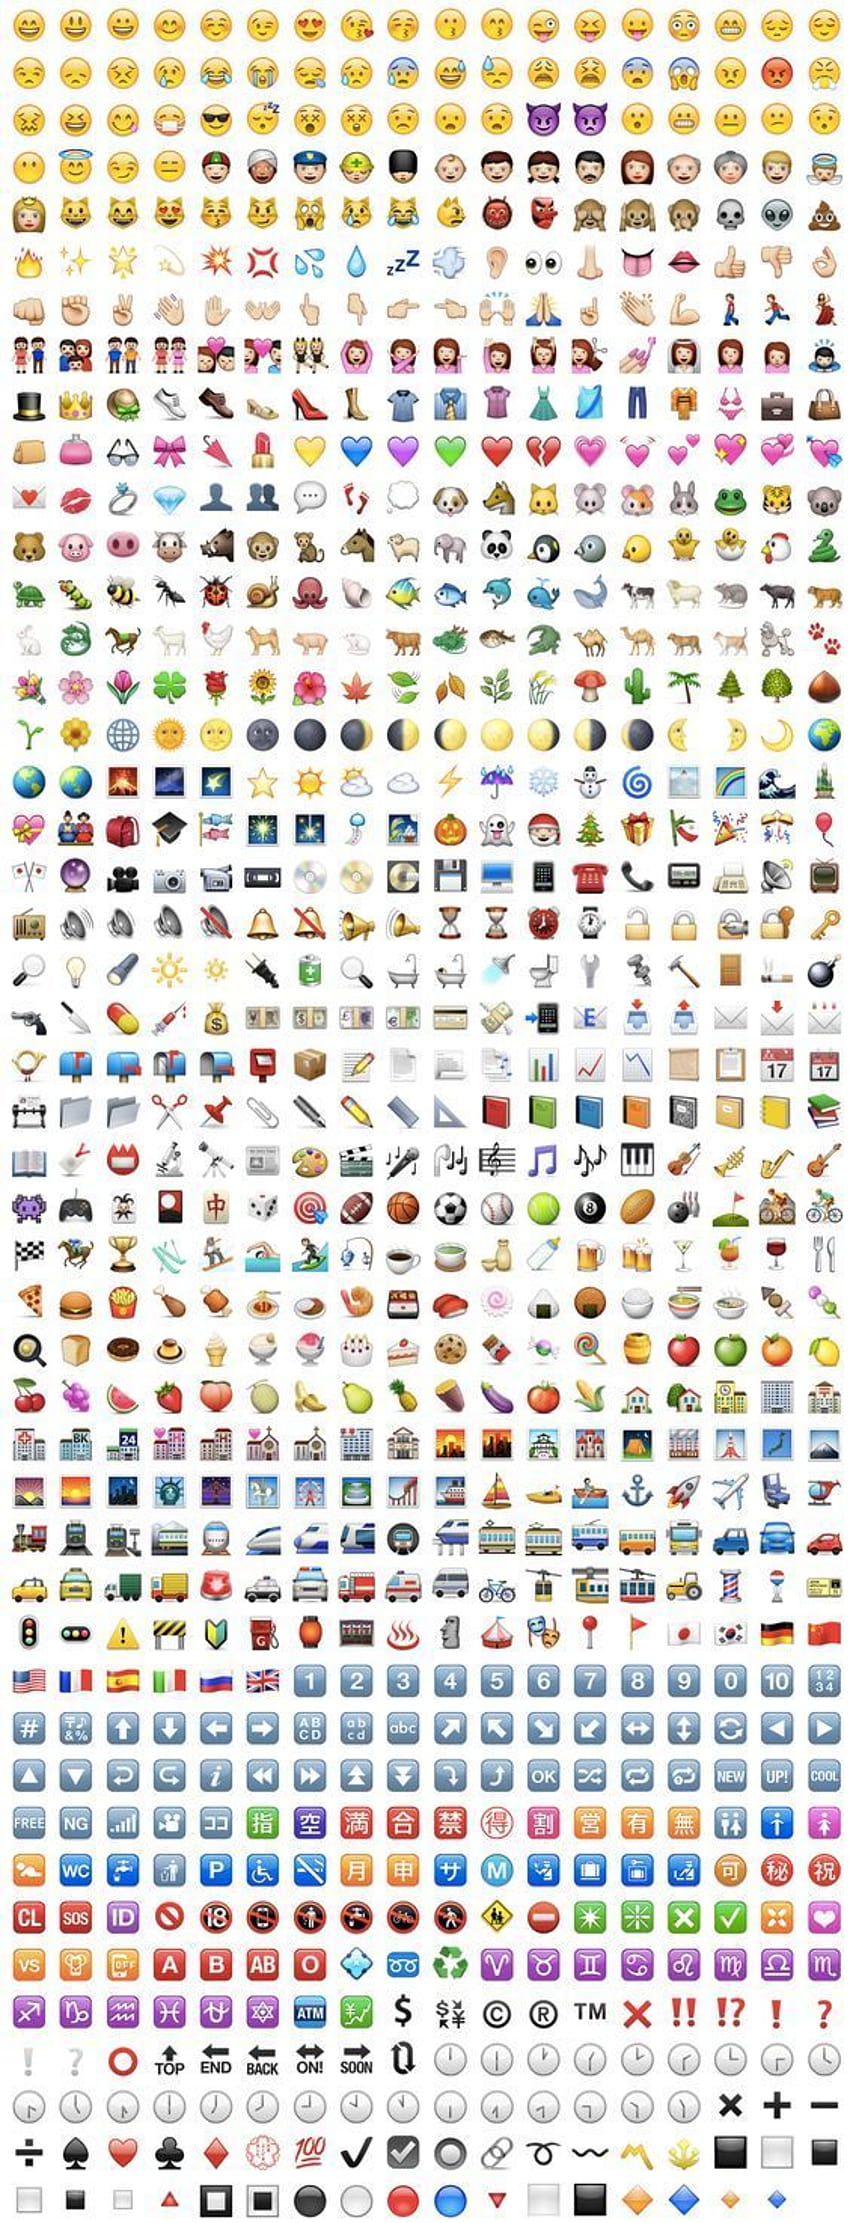 Apple Emoji List, copy and paste HD phone wallpaper